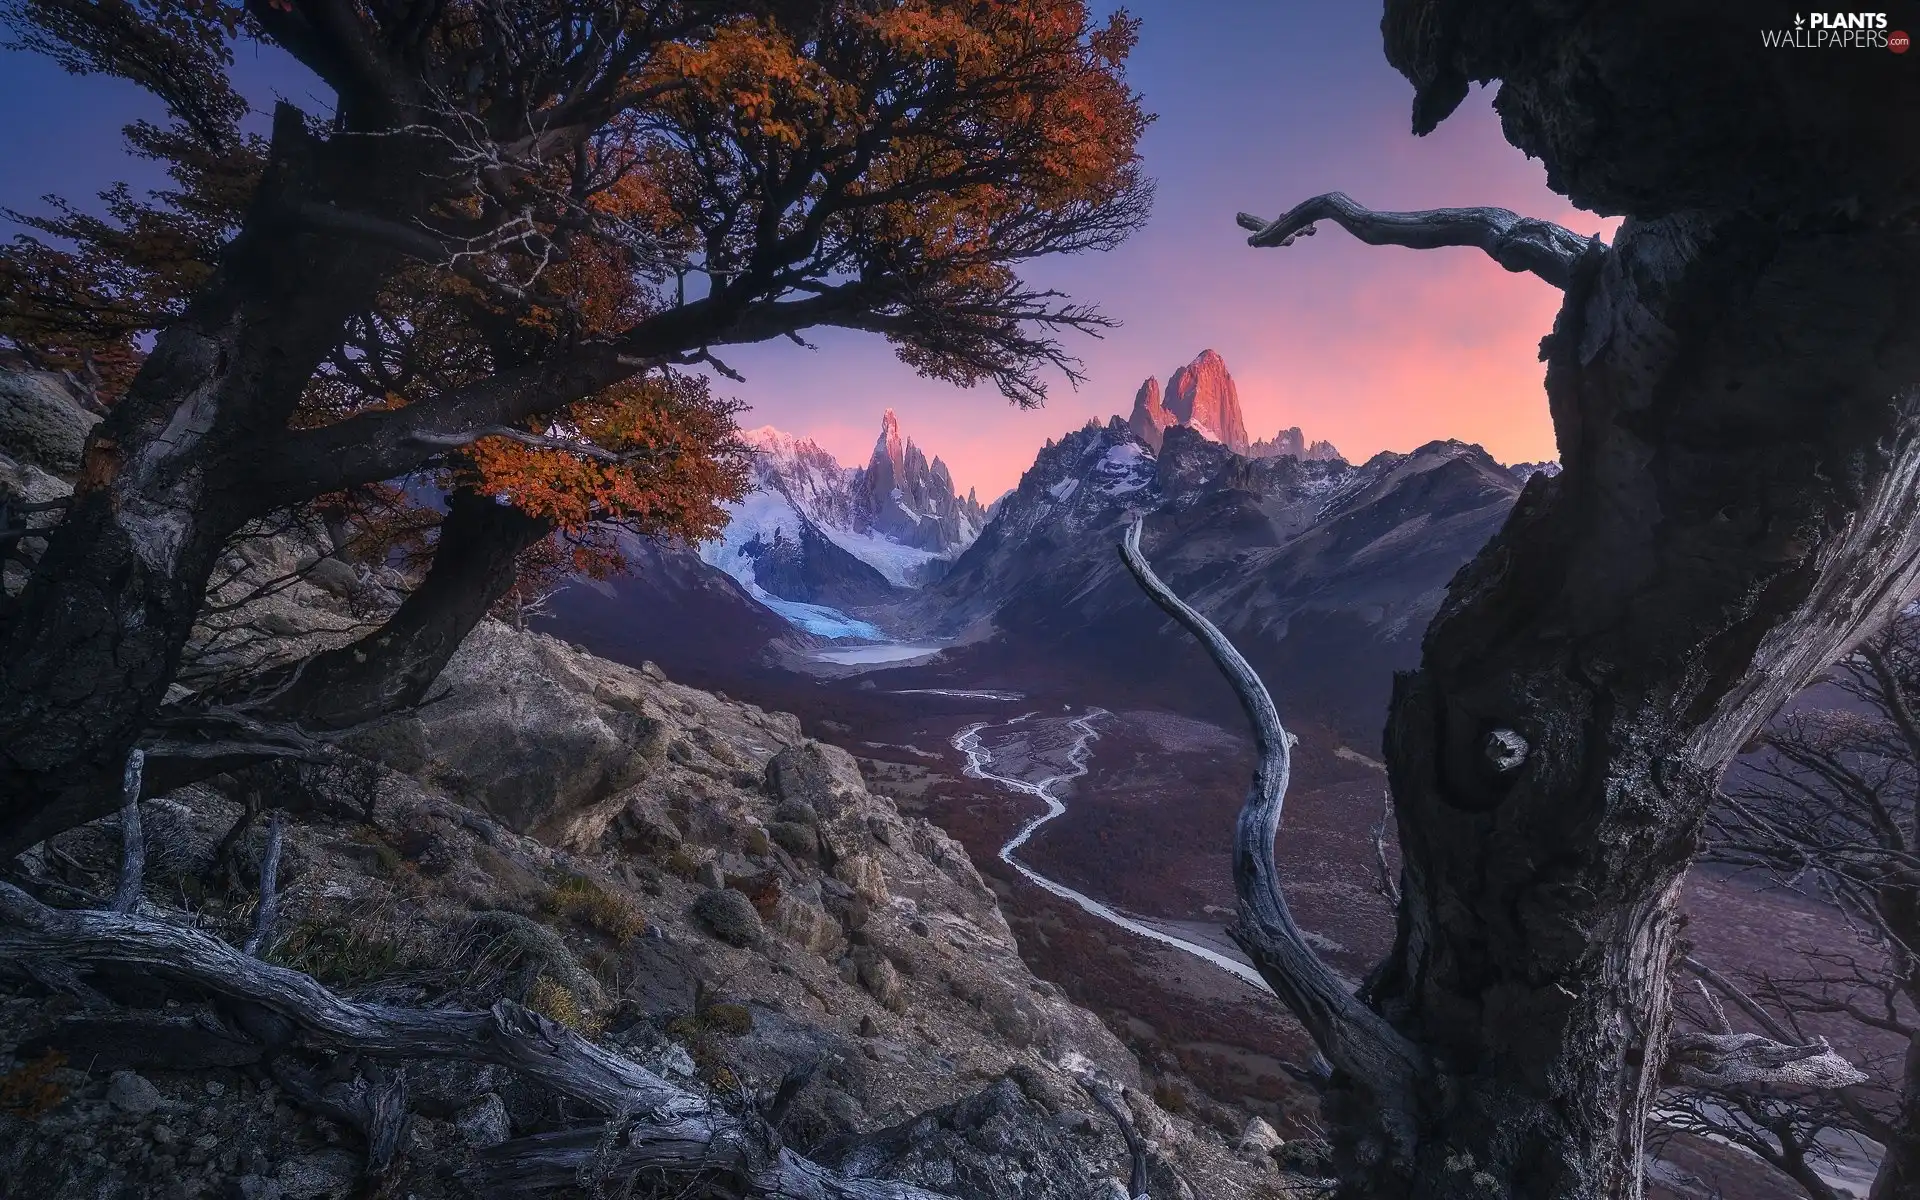 Patagonia, Argentina, Los Glaciares National Park, autumn, viewes, River Rio de las Vueltas, Fitz Roy Mountain, trees, Mountains